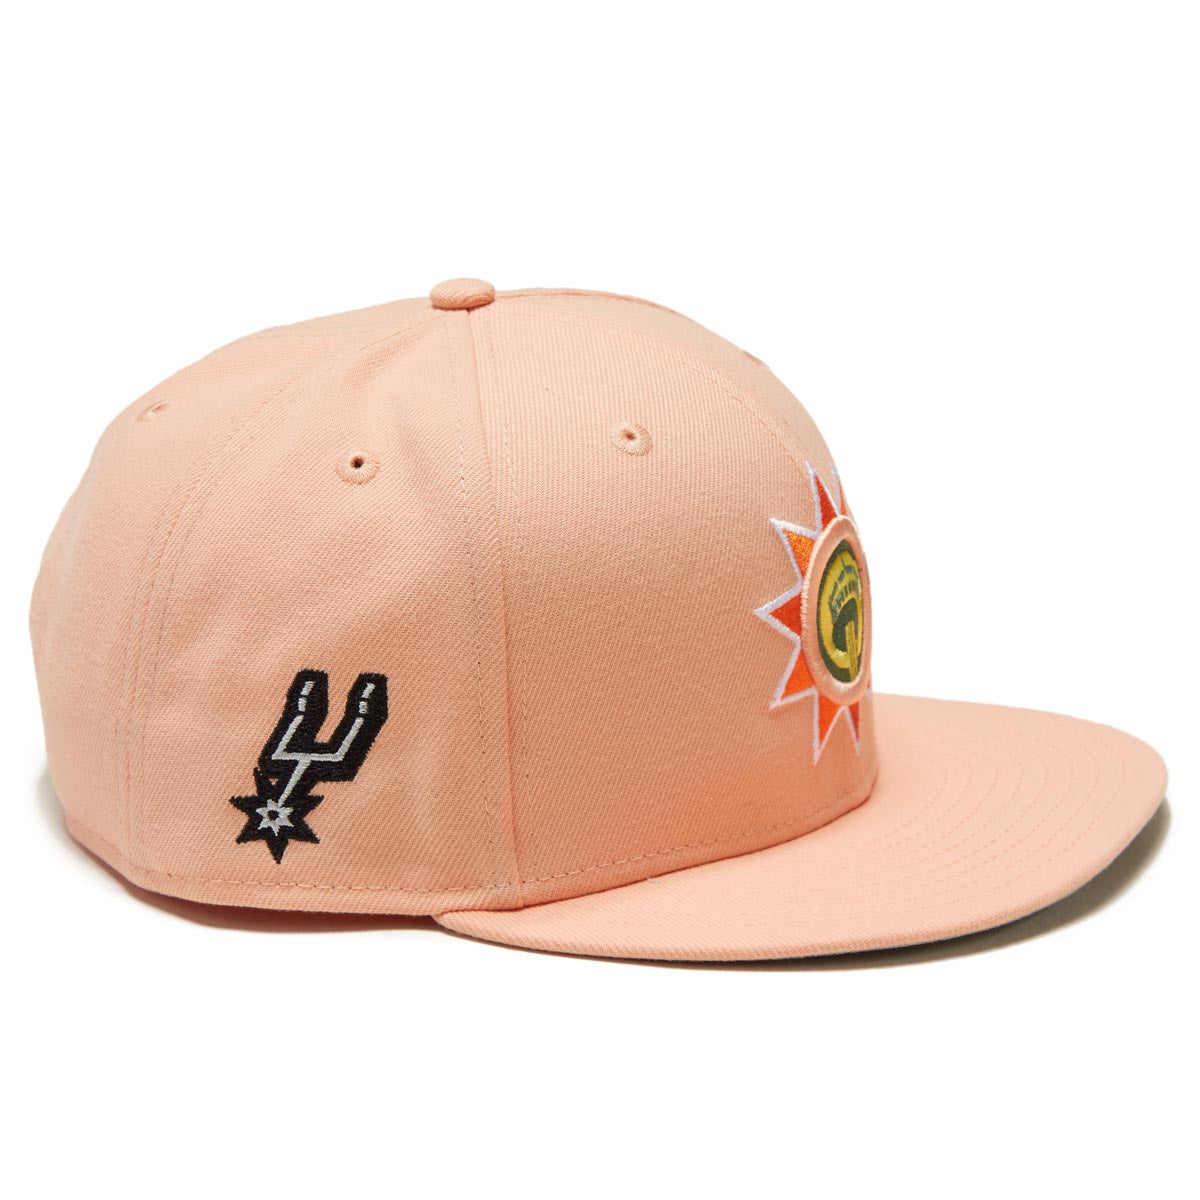 New Era x NBA 950 ALT 23 San Antonio Spurs Hat - Orange/Black – CCS